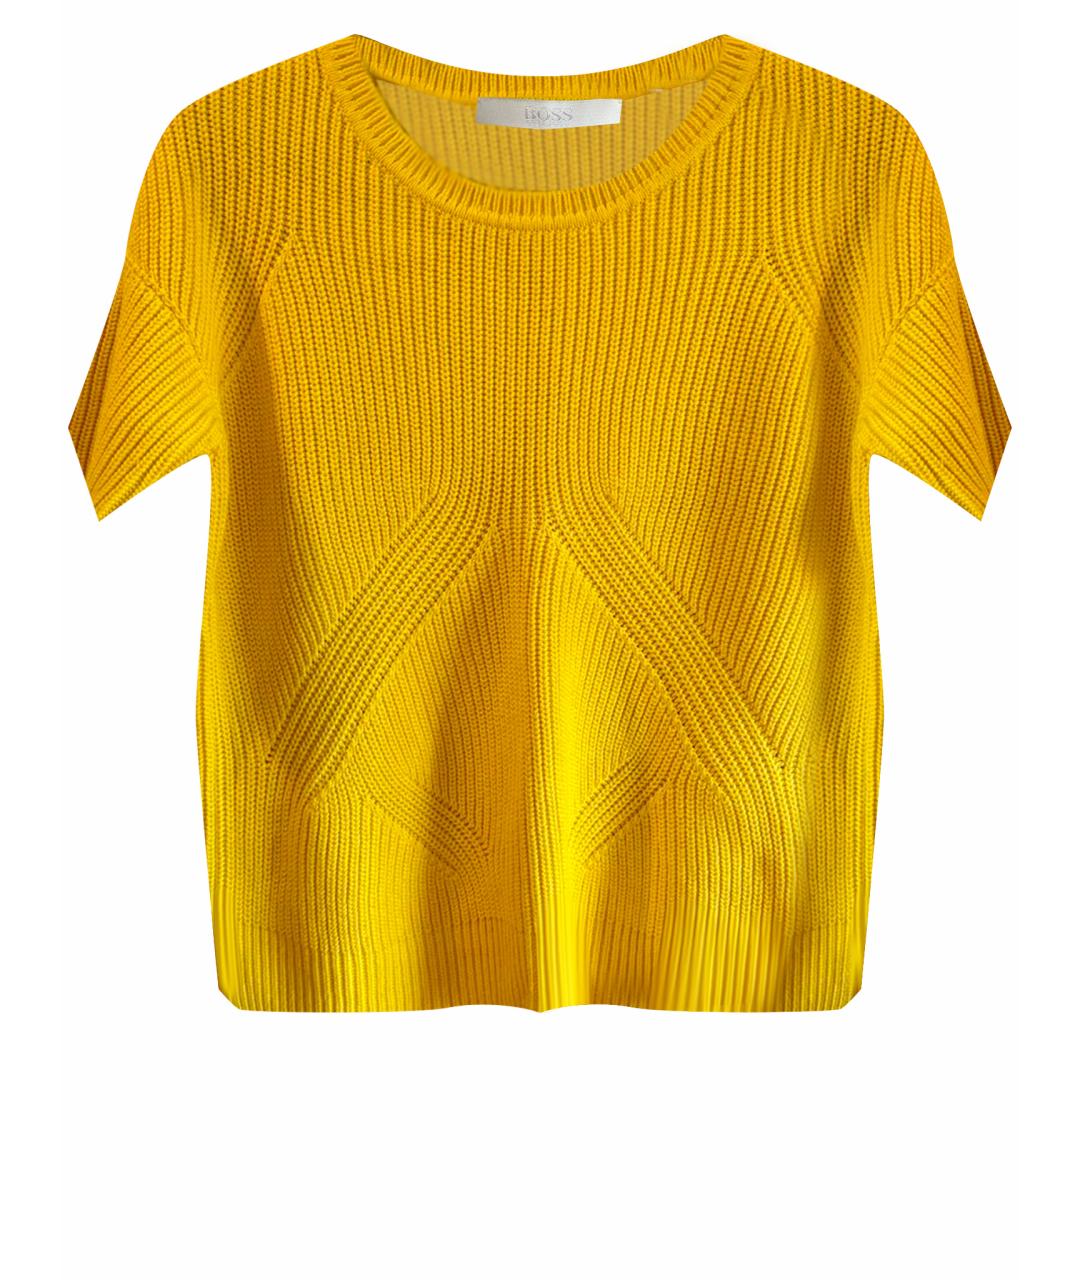 HUGO BOSS Желтый шелковый джемпер / свитер, фото 1